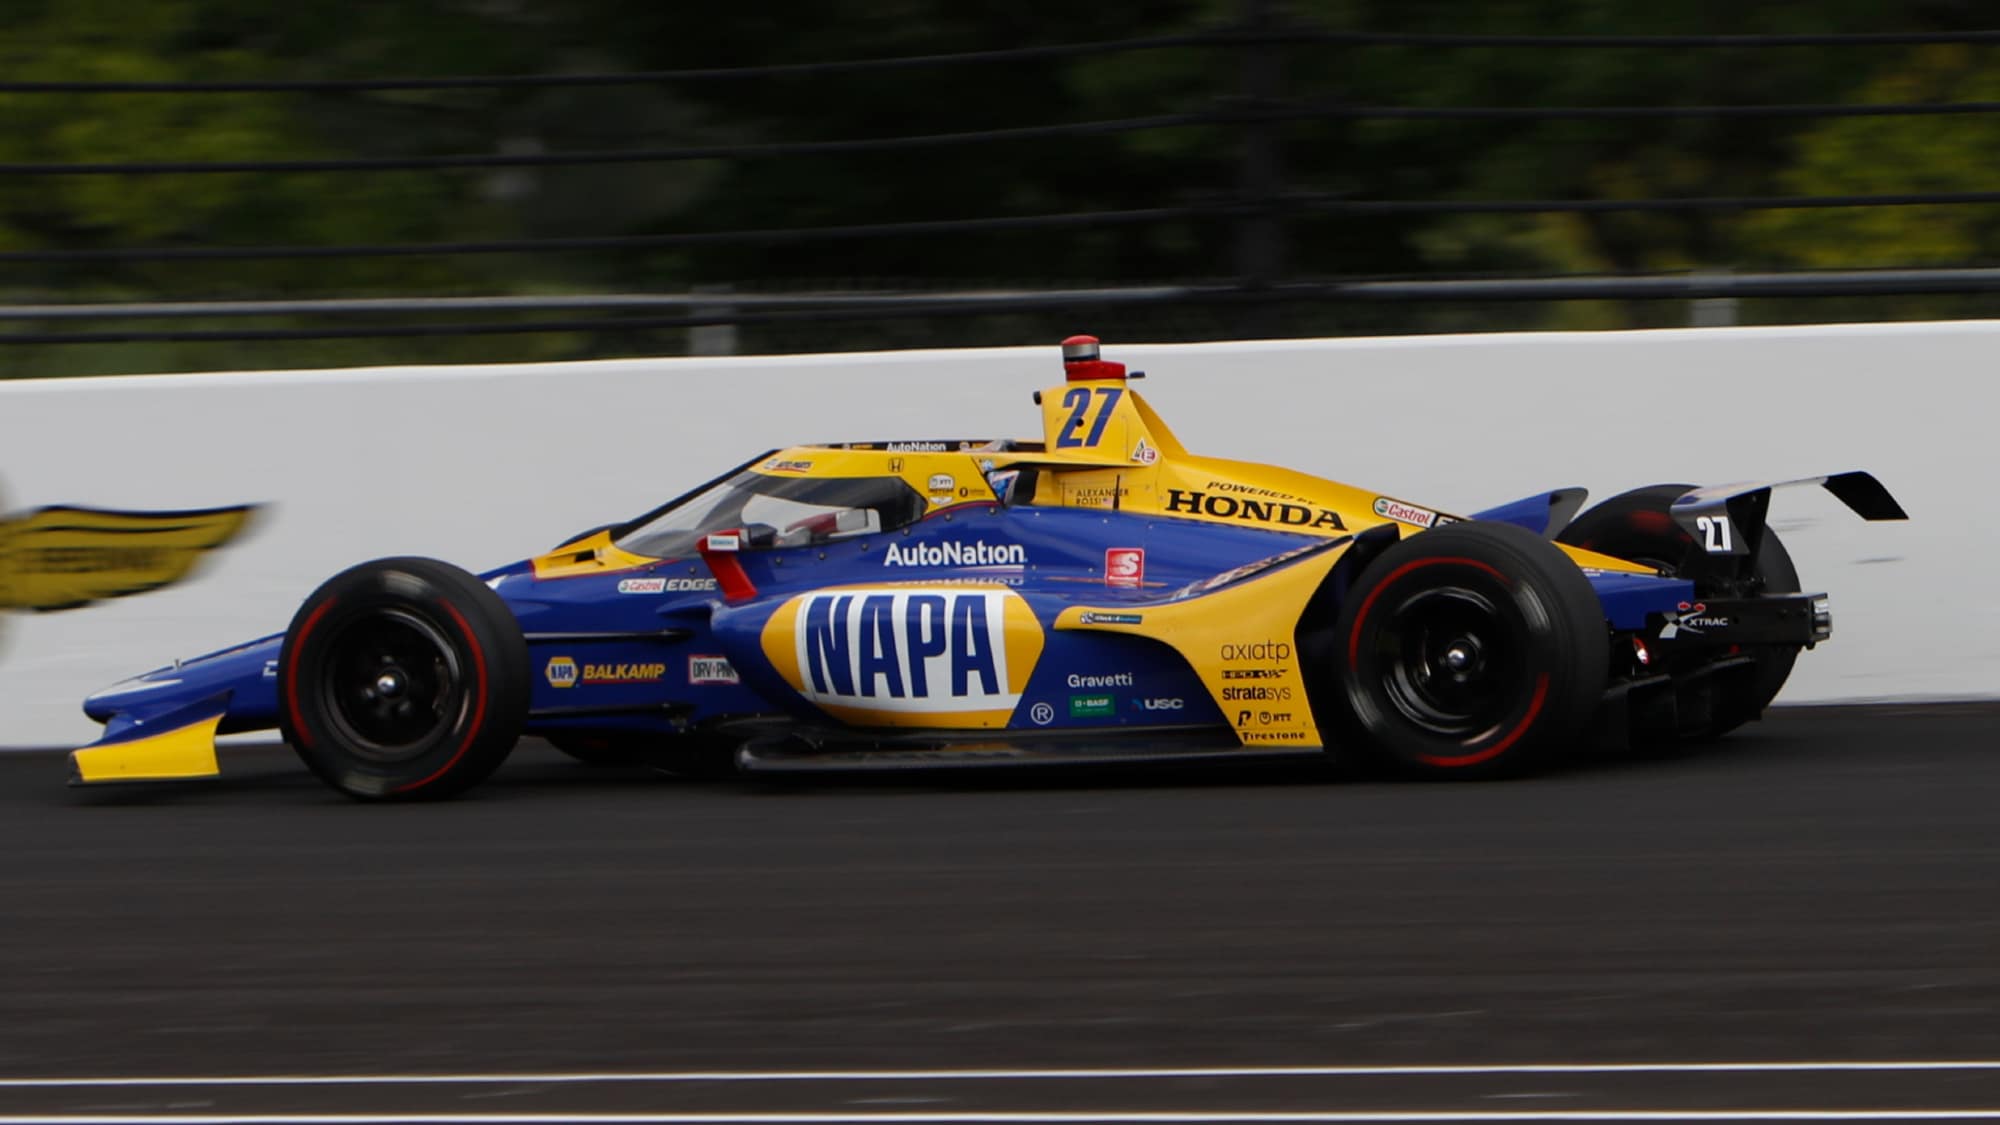 Alexander Rossi, 2020 Indy 500